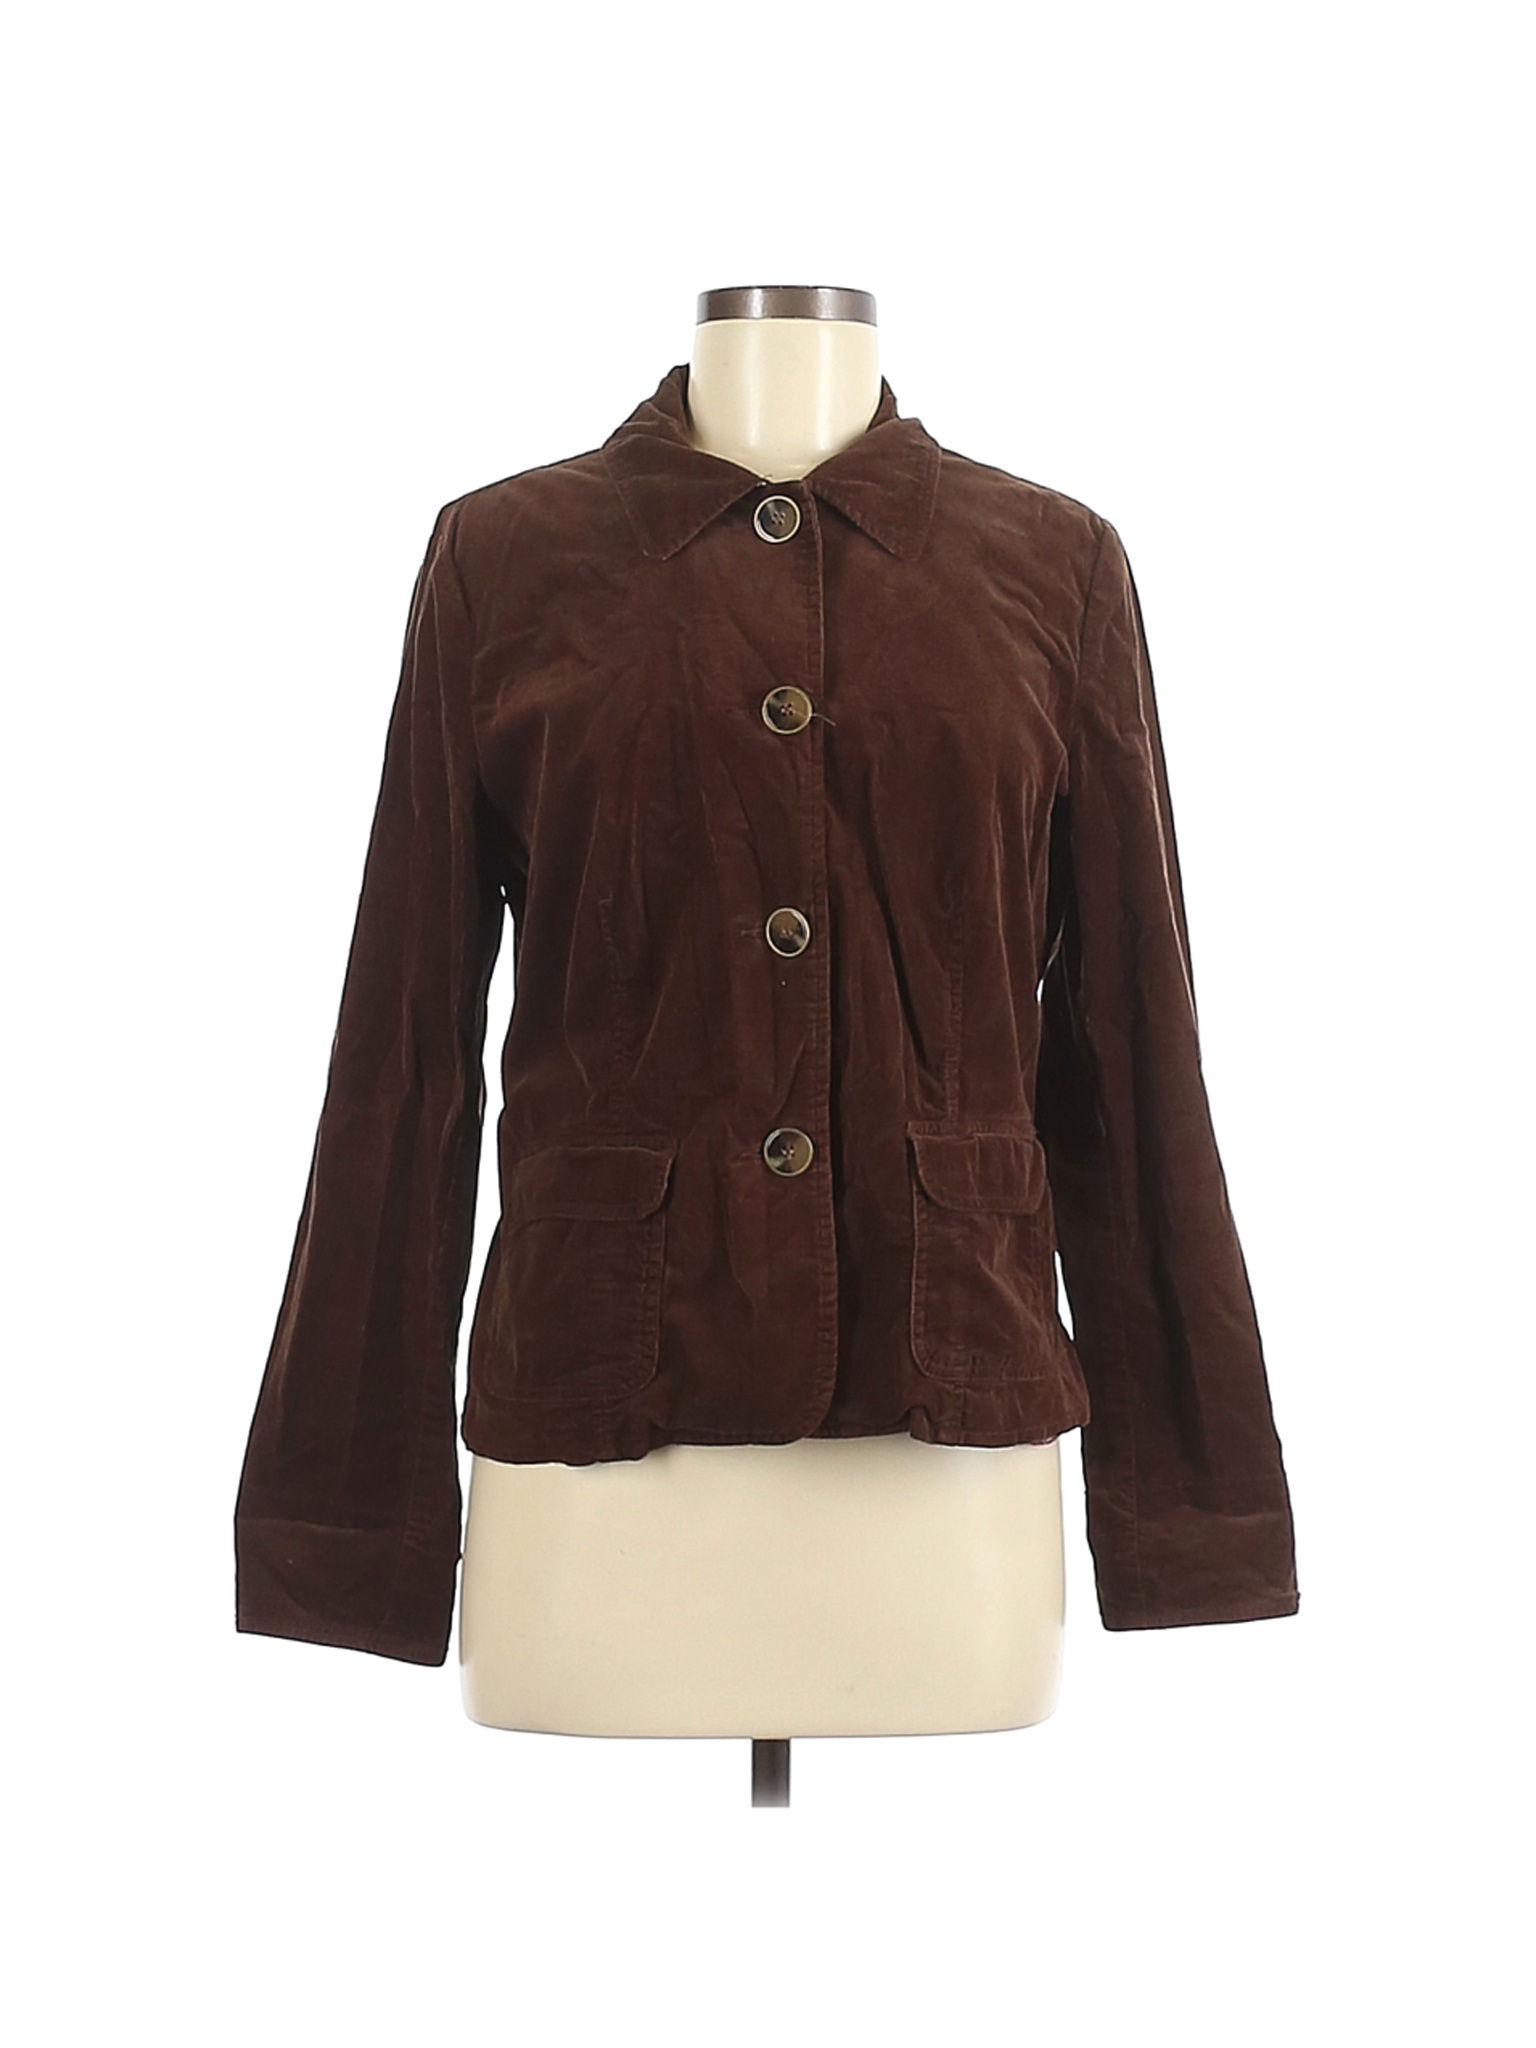 Charter Club Women Brown Jacket M | eBay